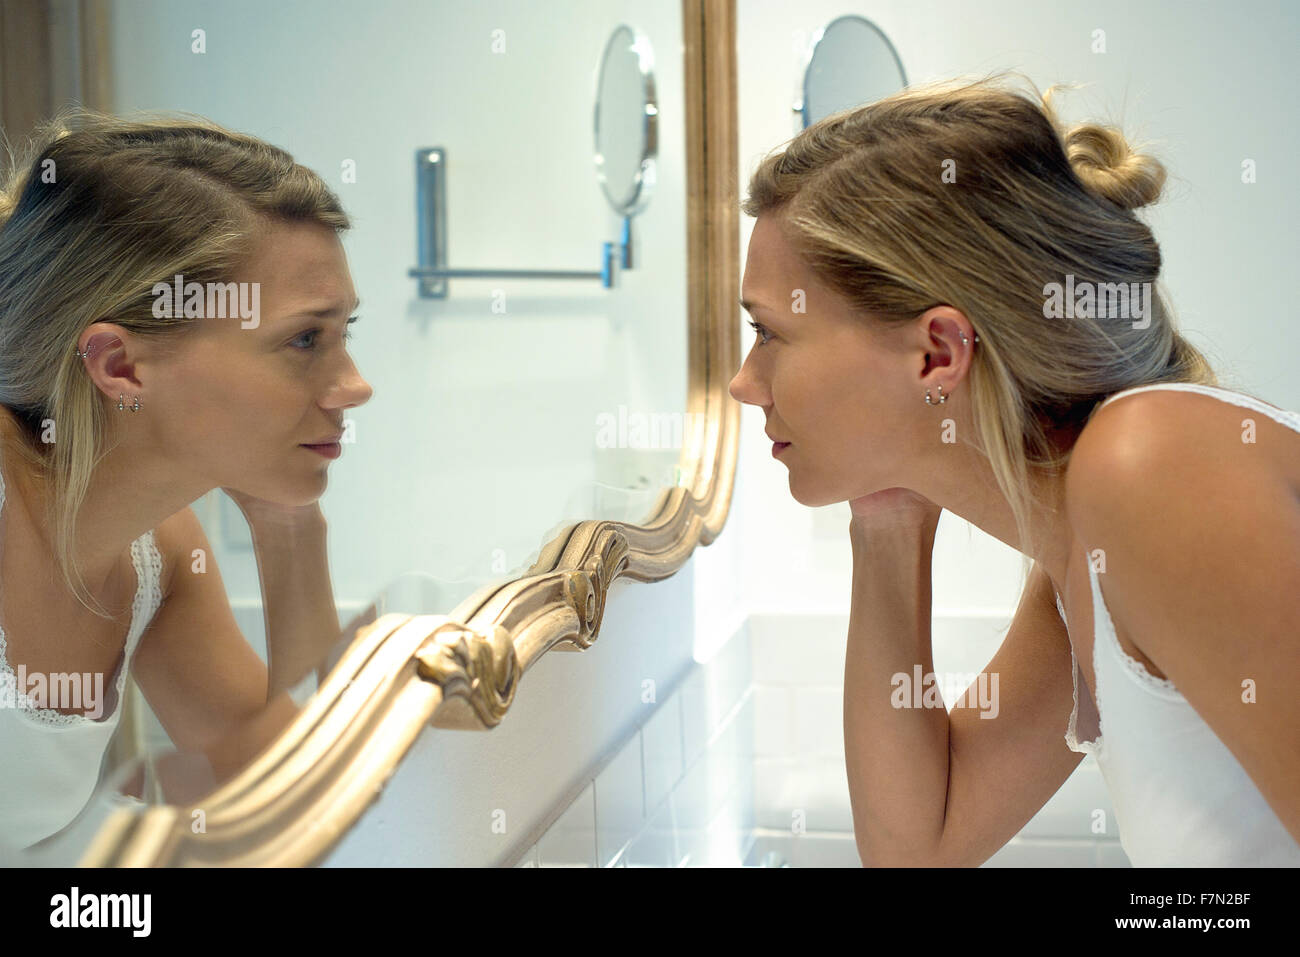 Woman looking at self in bathroom mirror Stock Photo